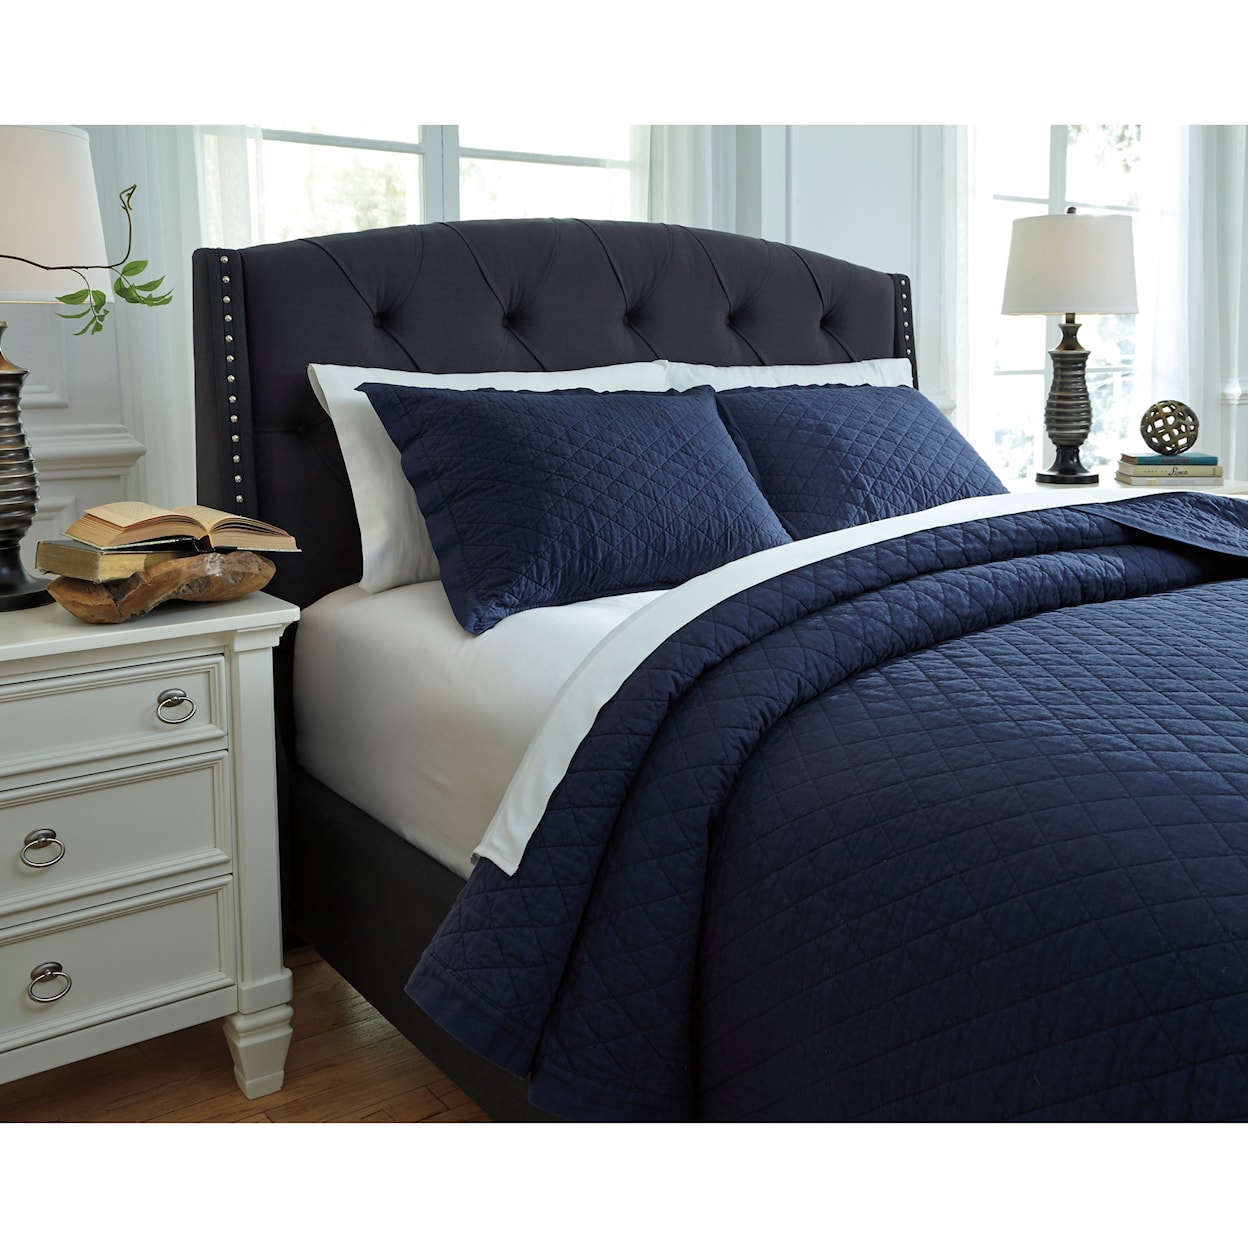 Signature Design by Ashley Furniture Bedding Sets Queen Alecio Navy Quilt Set